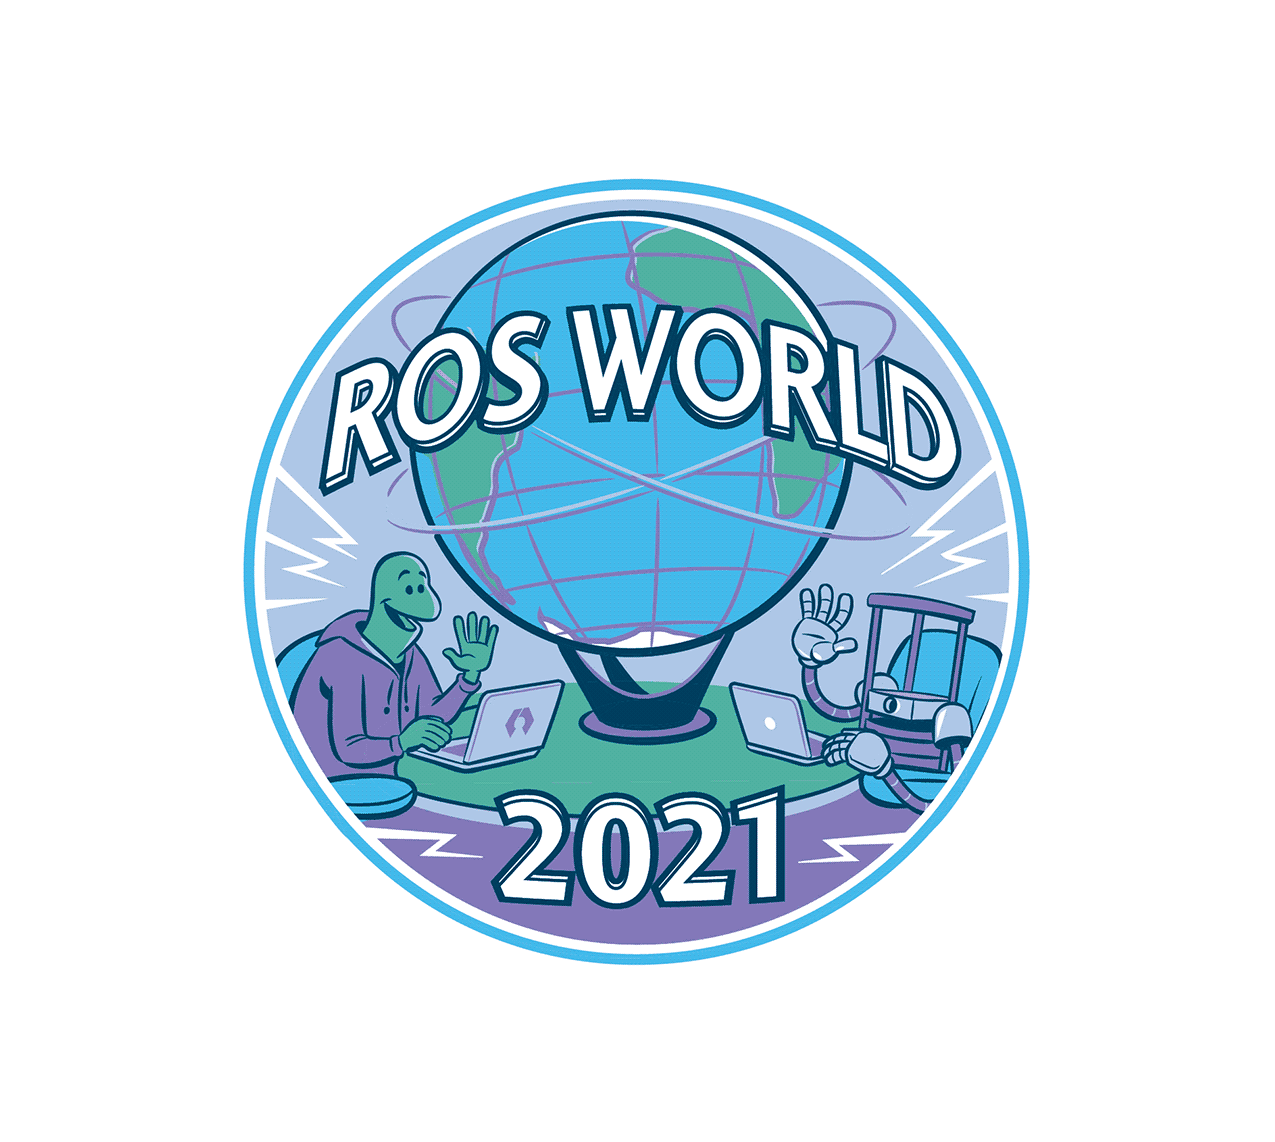 Meet PickNik at ROS World 2021